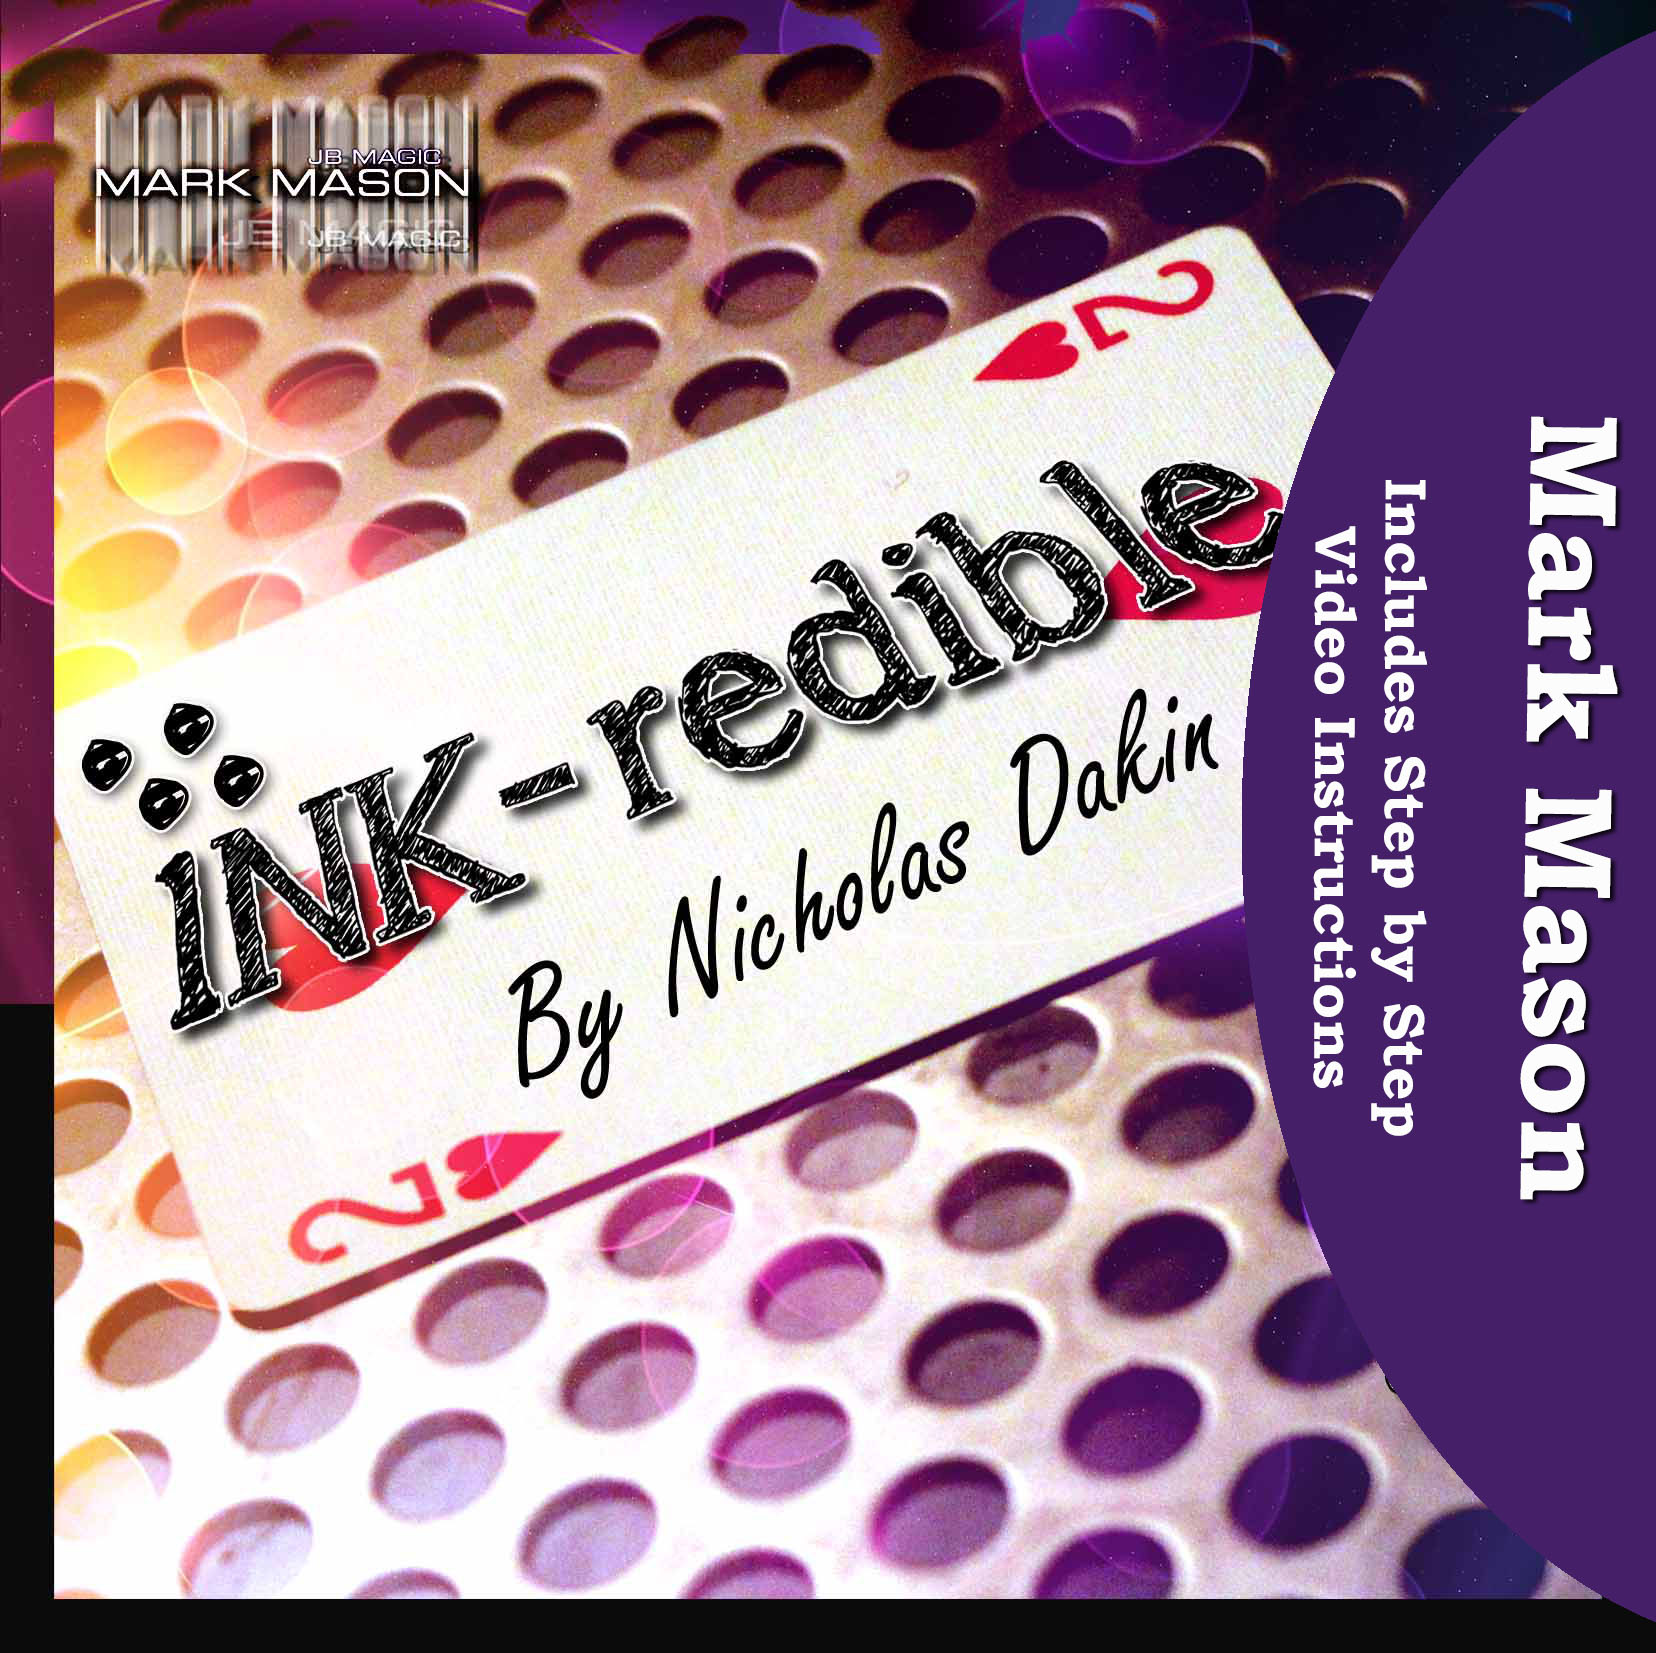 INK-redible By Nicholas Dakin (4105-w6)